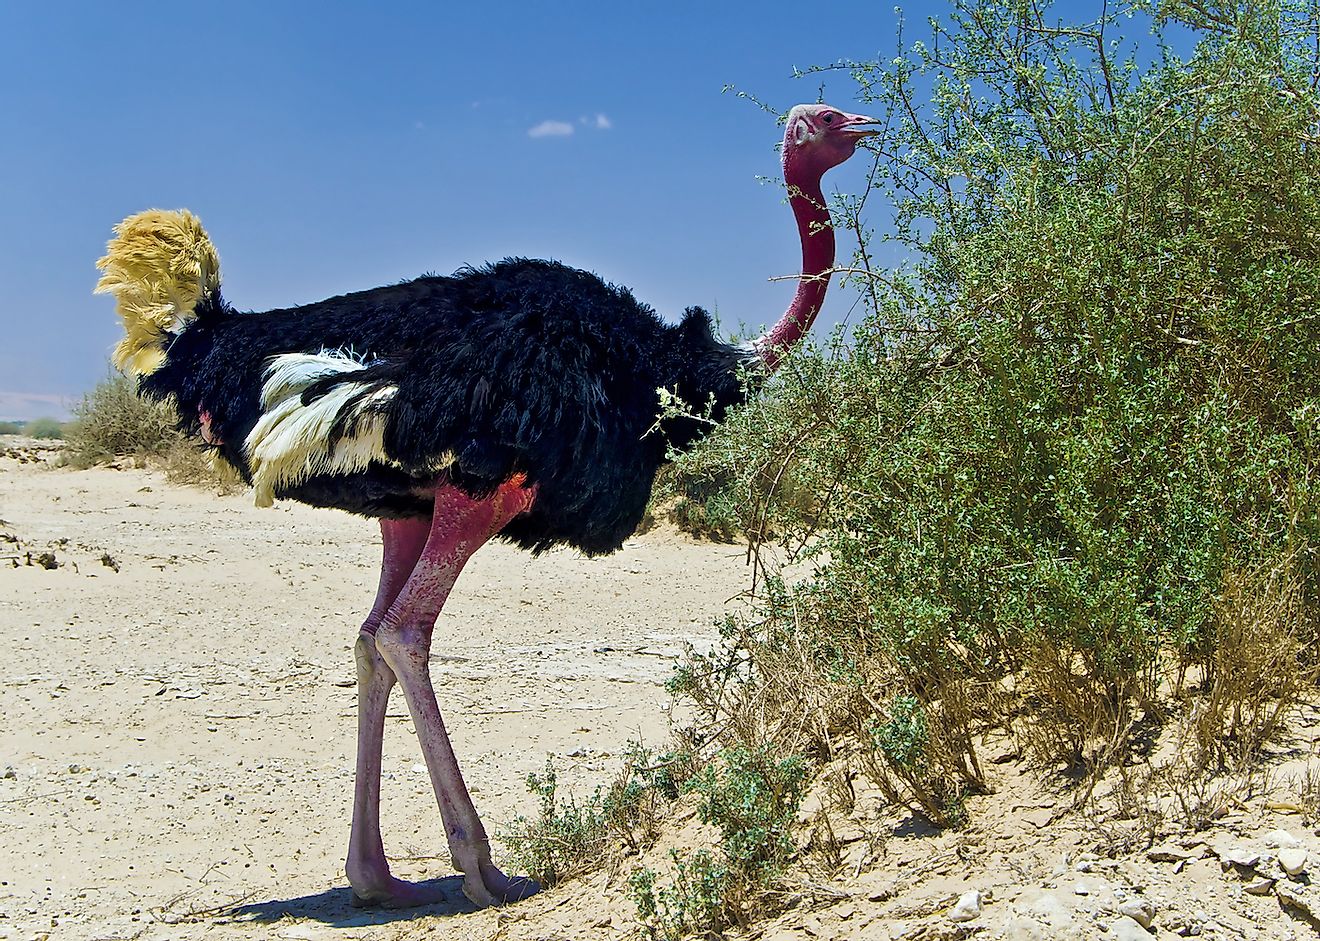 A male North African ostrich. Image credit: Sergei25/Shutterstock.com